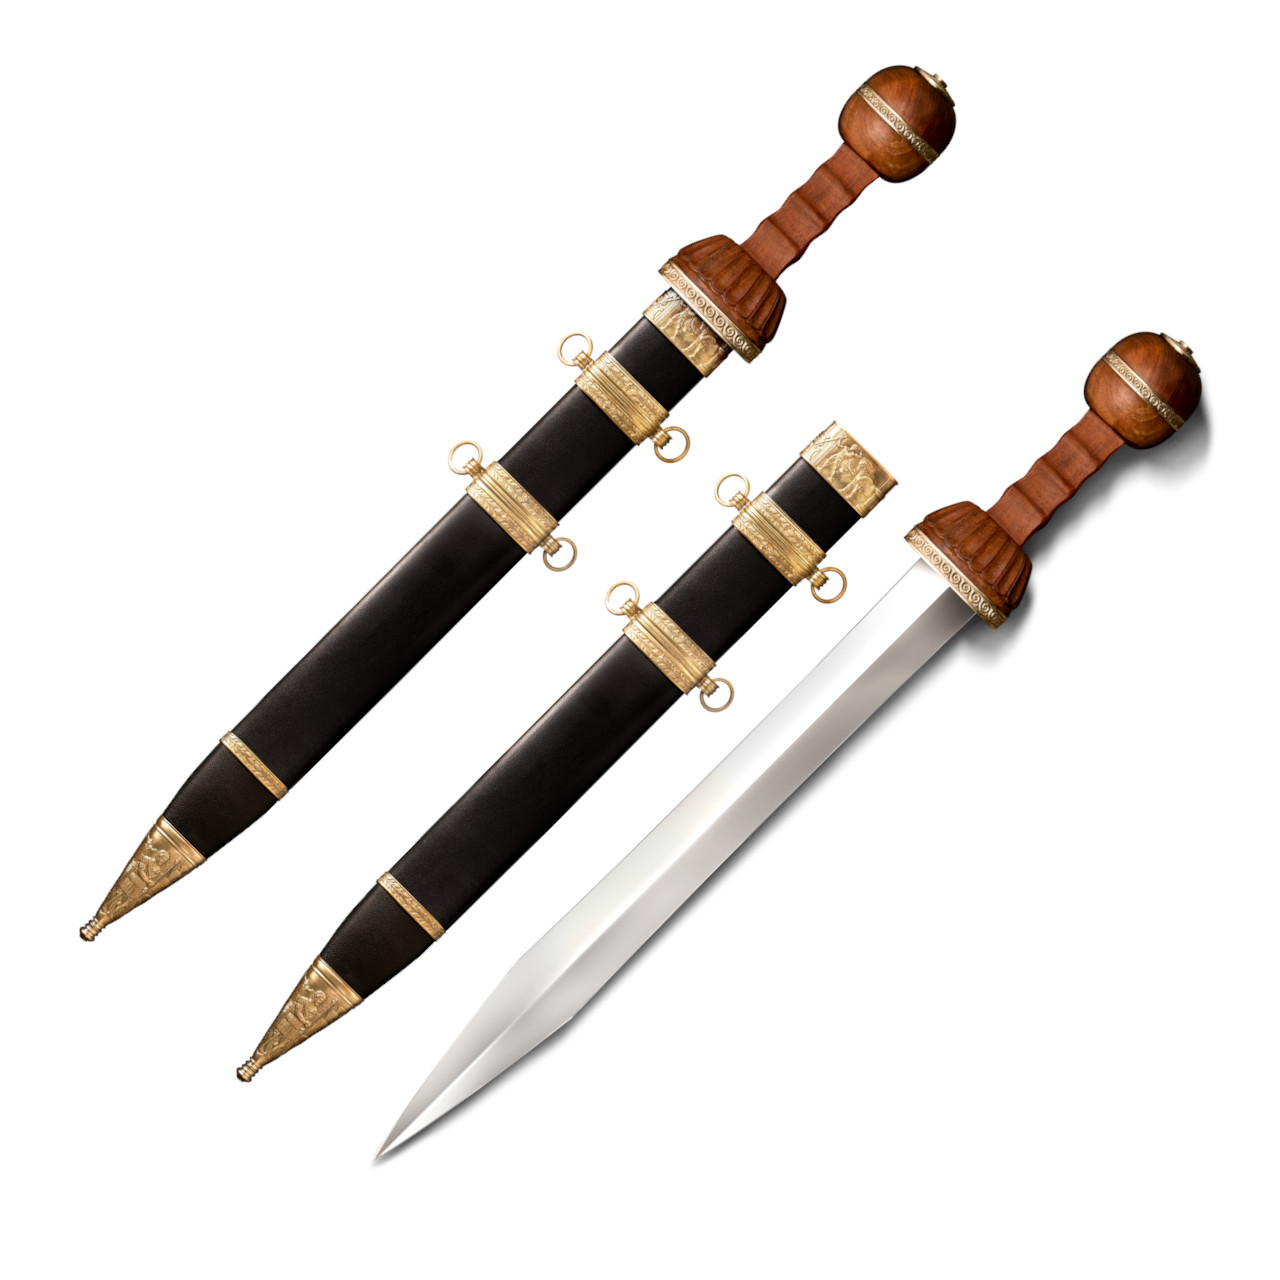 roman swords